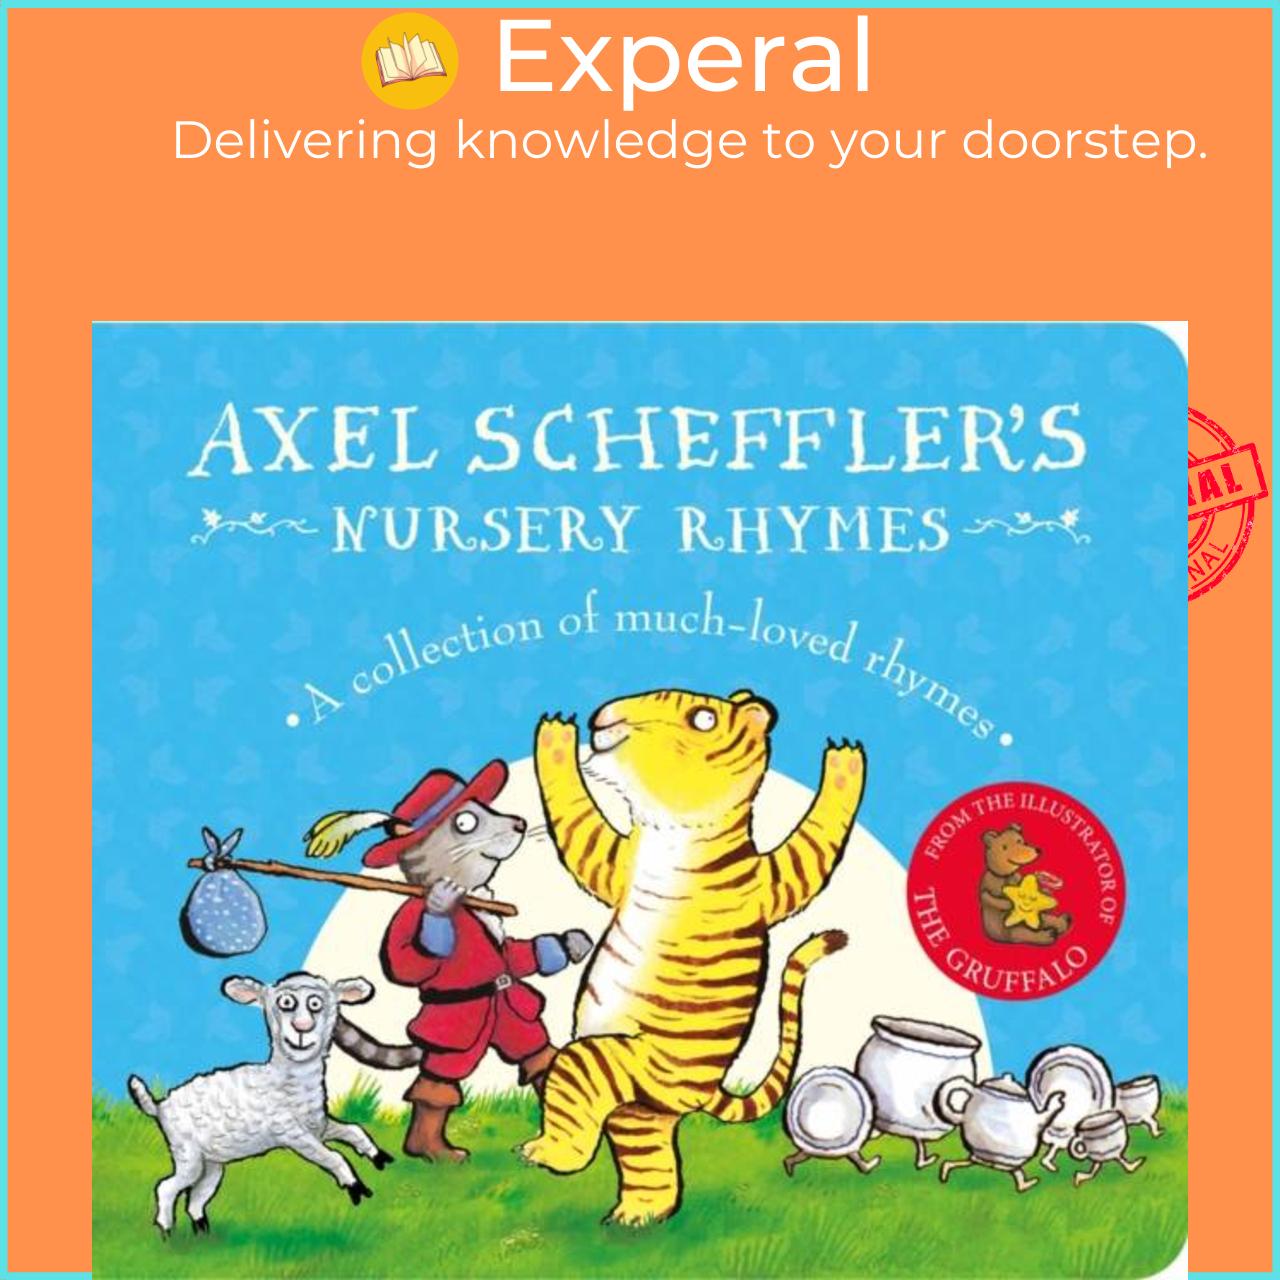 Sách - Axel Scheffler's Nursery Rhymes by Axel Scheffler (UK edition, boardbook)